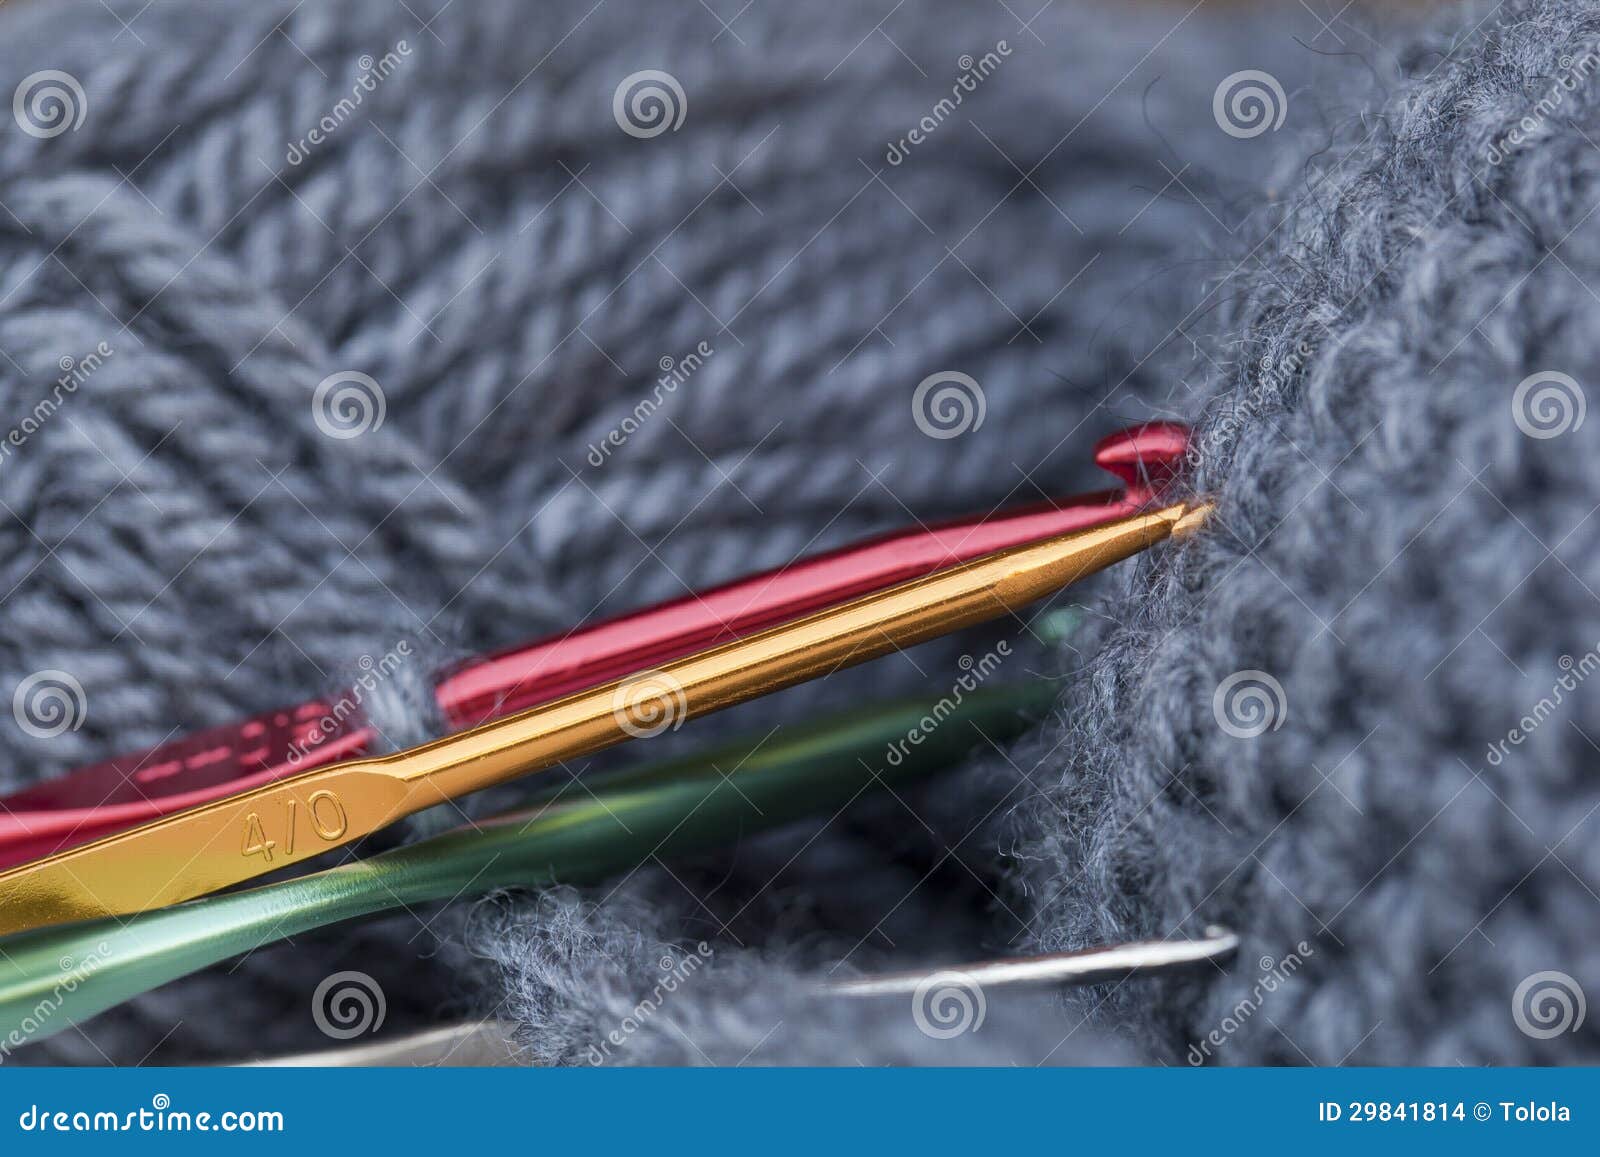 colored crochet hooks